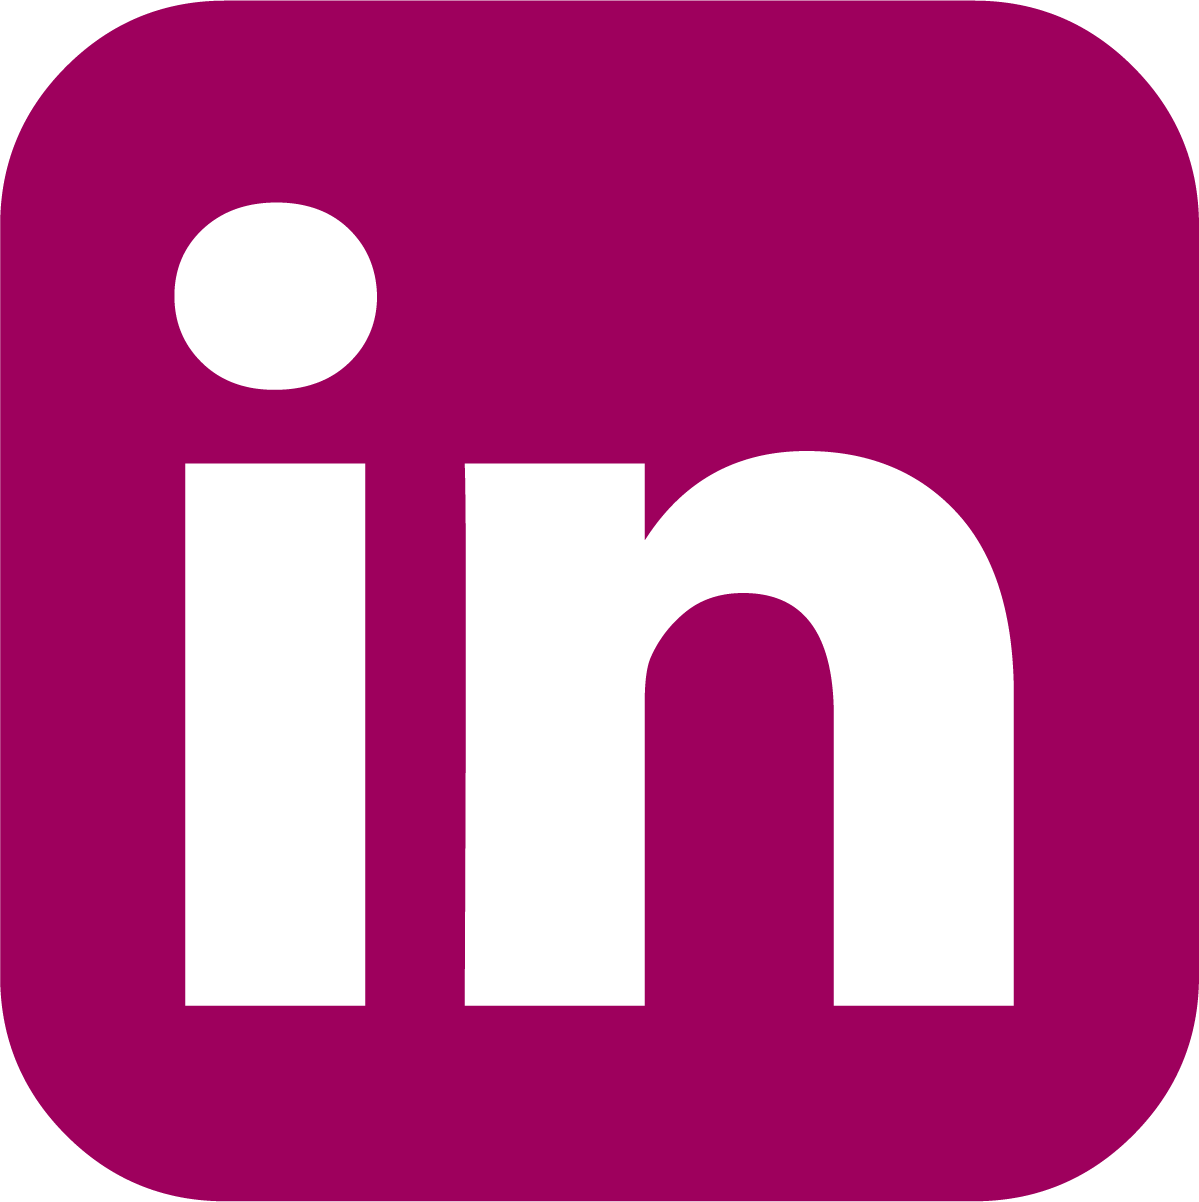 Contact Me On LinkedIn Logo - Free Small Linkedin Icon 270343 | Download Small Linkedin Icon - 270343